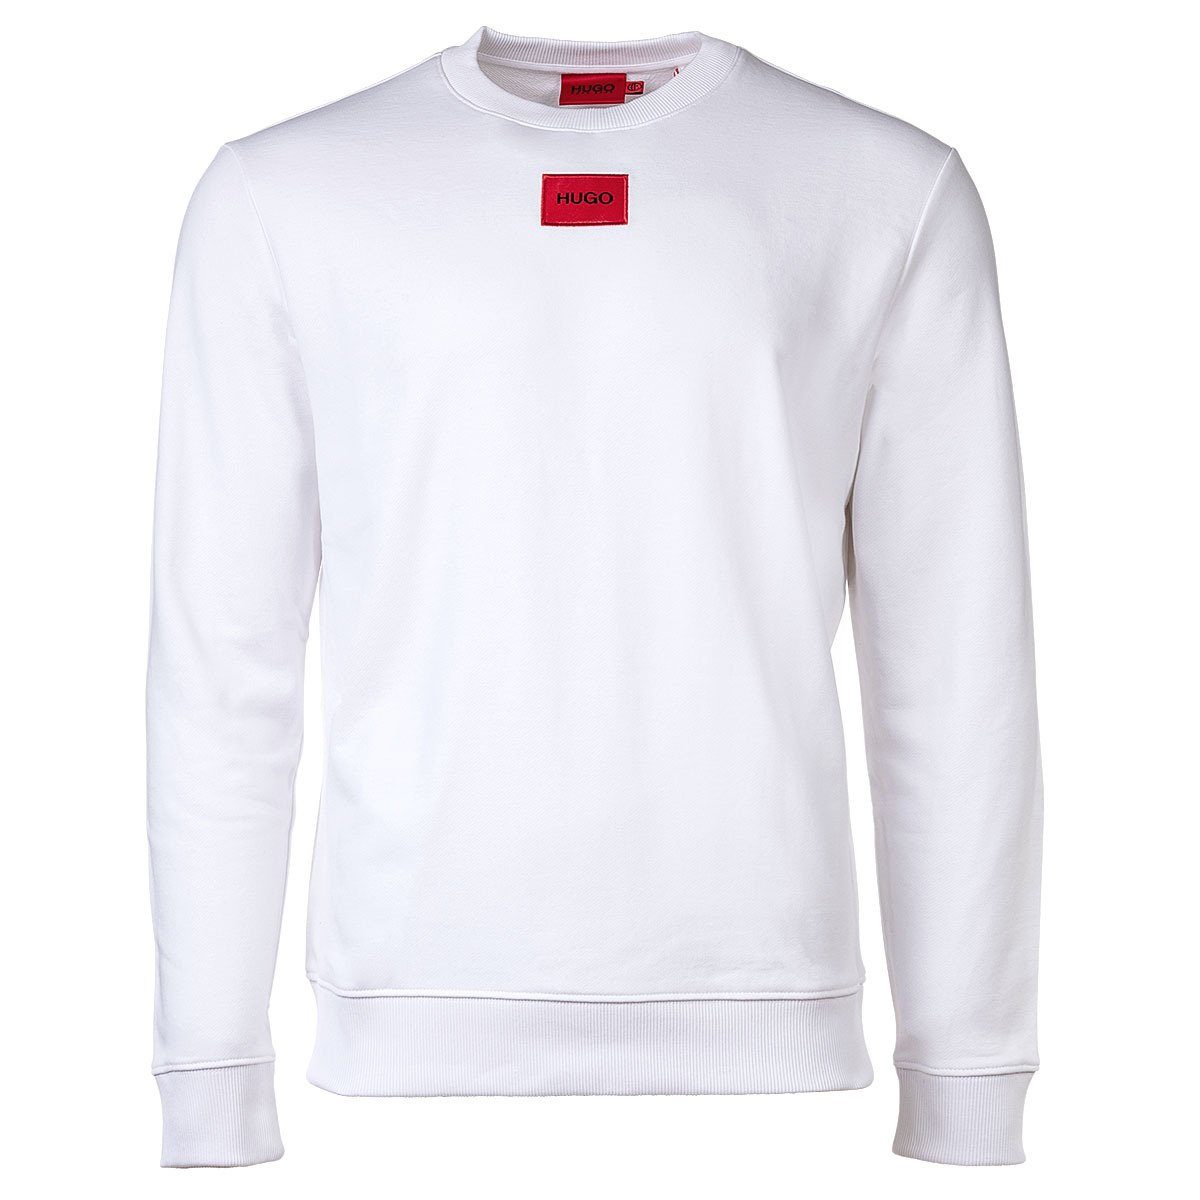 HUGO Sweatshirt Herren Sweater, Diragol212 - Sweatshirt, Rundhals Weiß